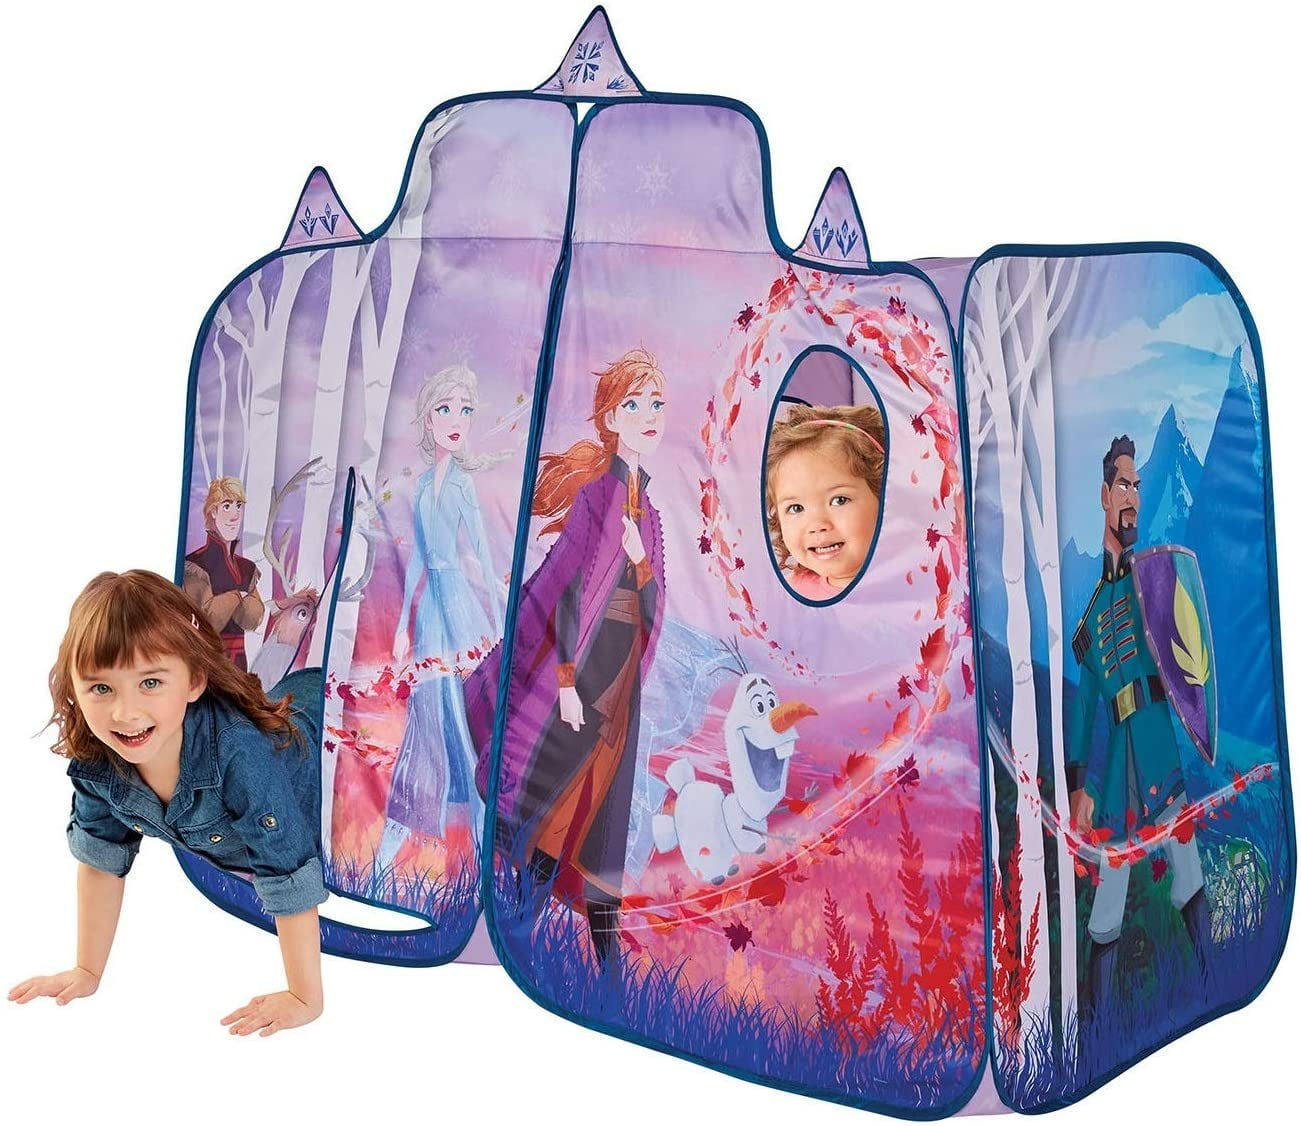 Disney Kids Pop Up Tent Frozen 2, Children's Playtent Playhouse For Indoor Outdoor, Great For Pretend Play In Bedroom Or Park, Blue (New Open Box)